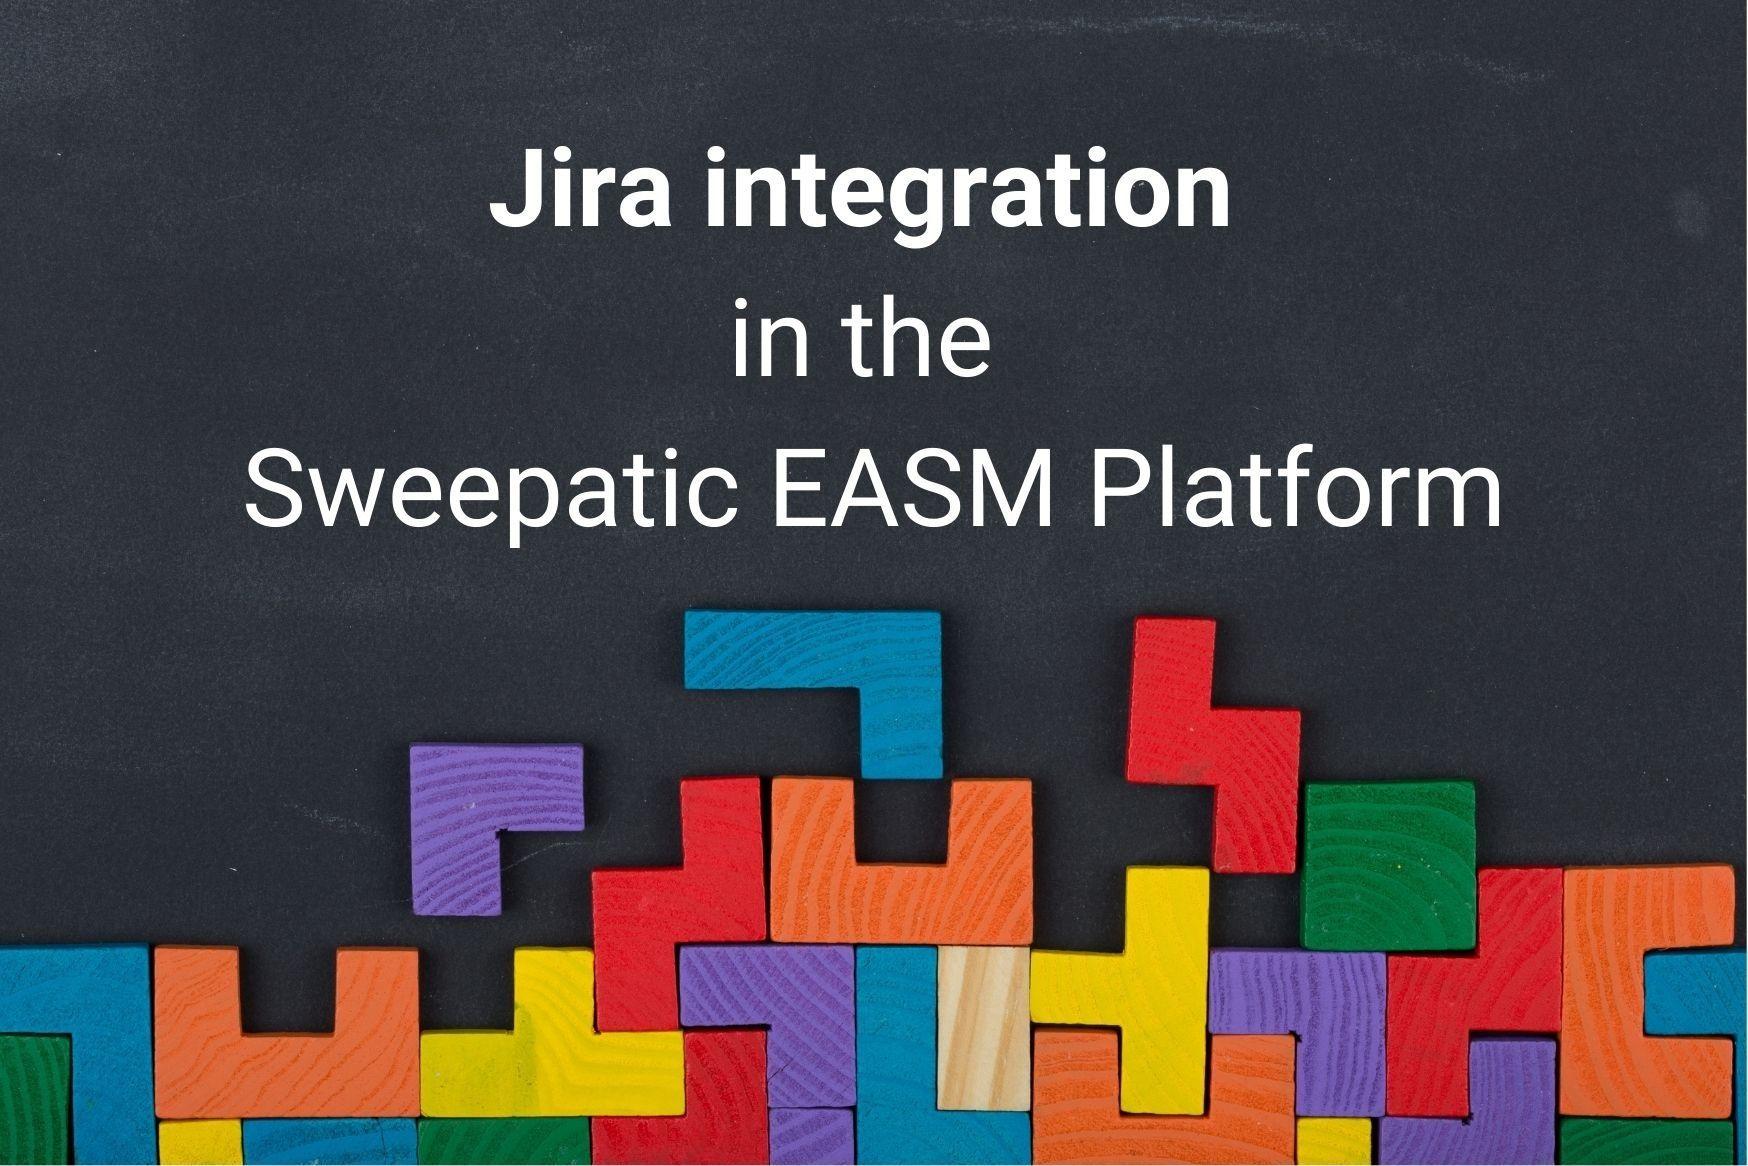 Jira integration in the Sweepatic EASM Platform